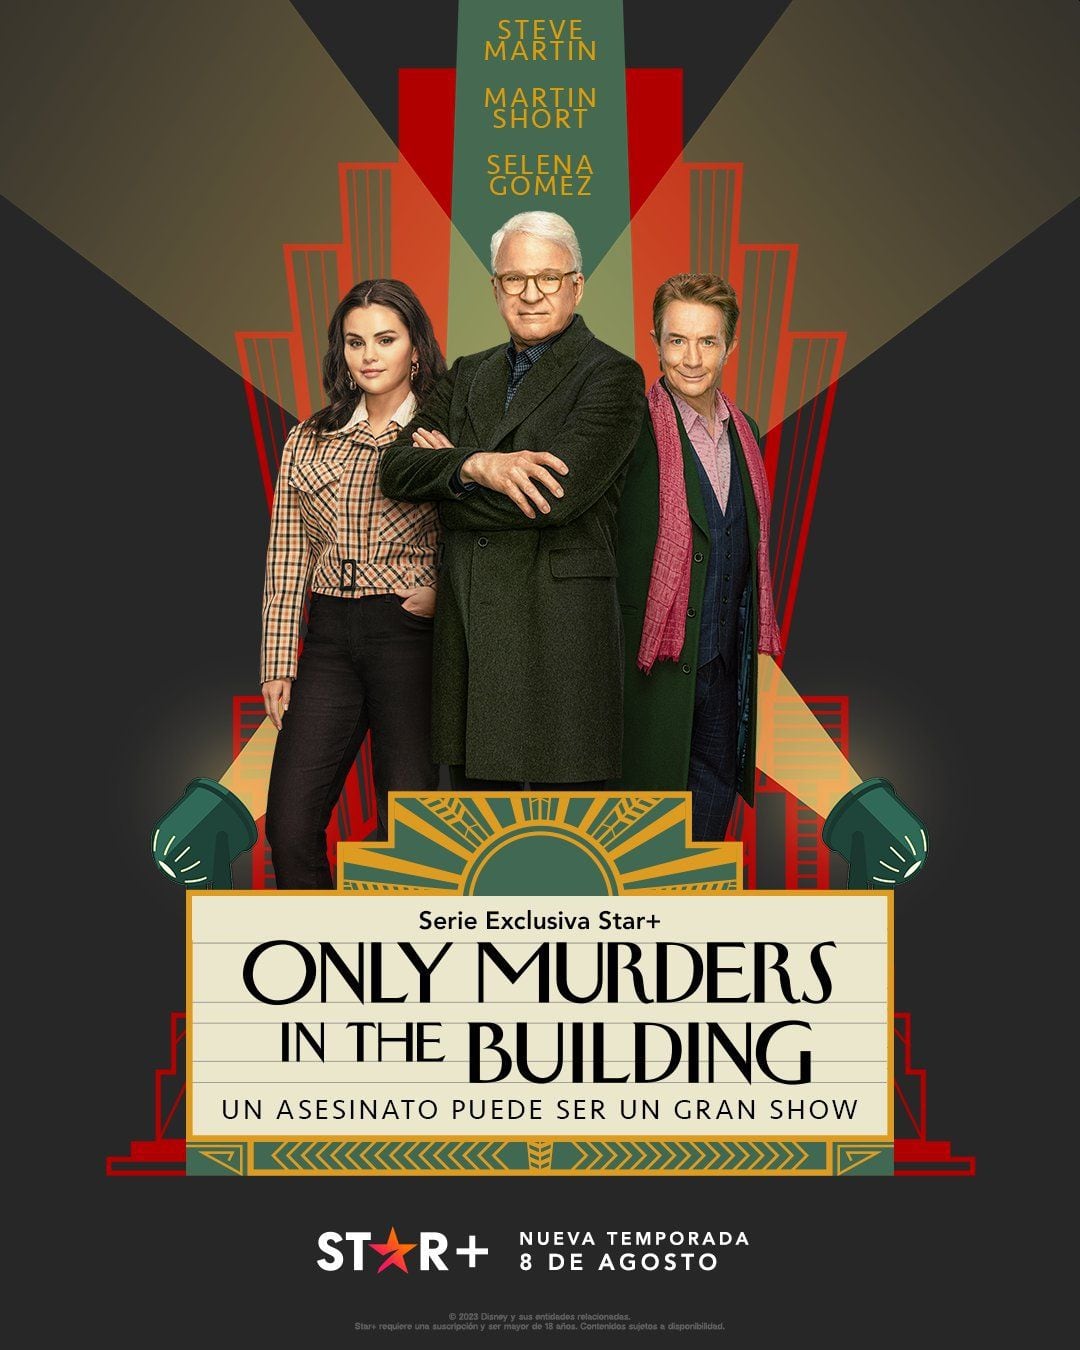 Selena Gomez, Steve Martin y Martin Short: el trío dinámico regresa "Only Murders in the Building". (Star+)